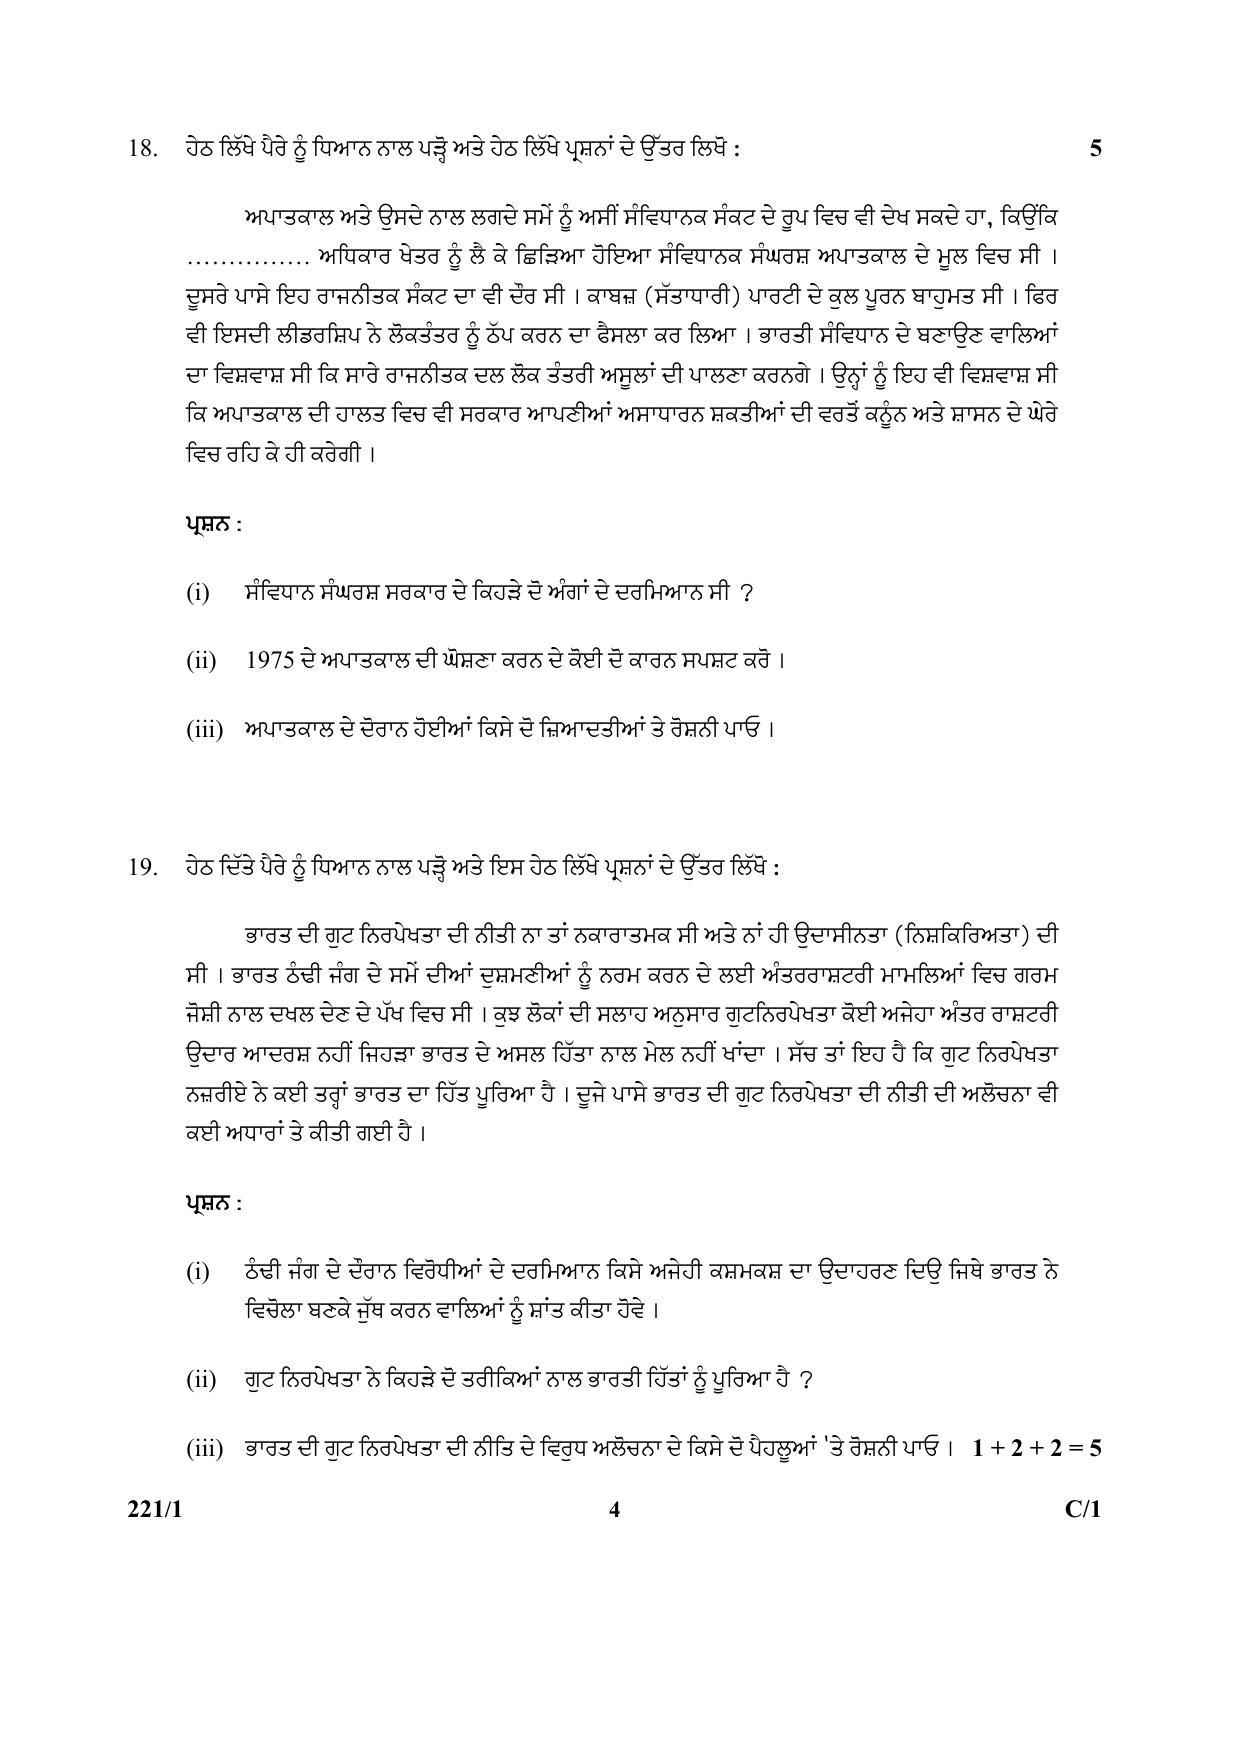 CBSE Class 12 221-1 Political Science_Punjabi 2018 Compartment Question Paper - Page 4